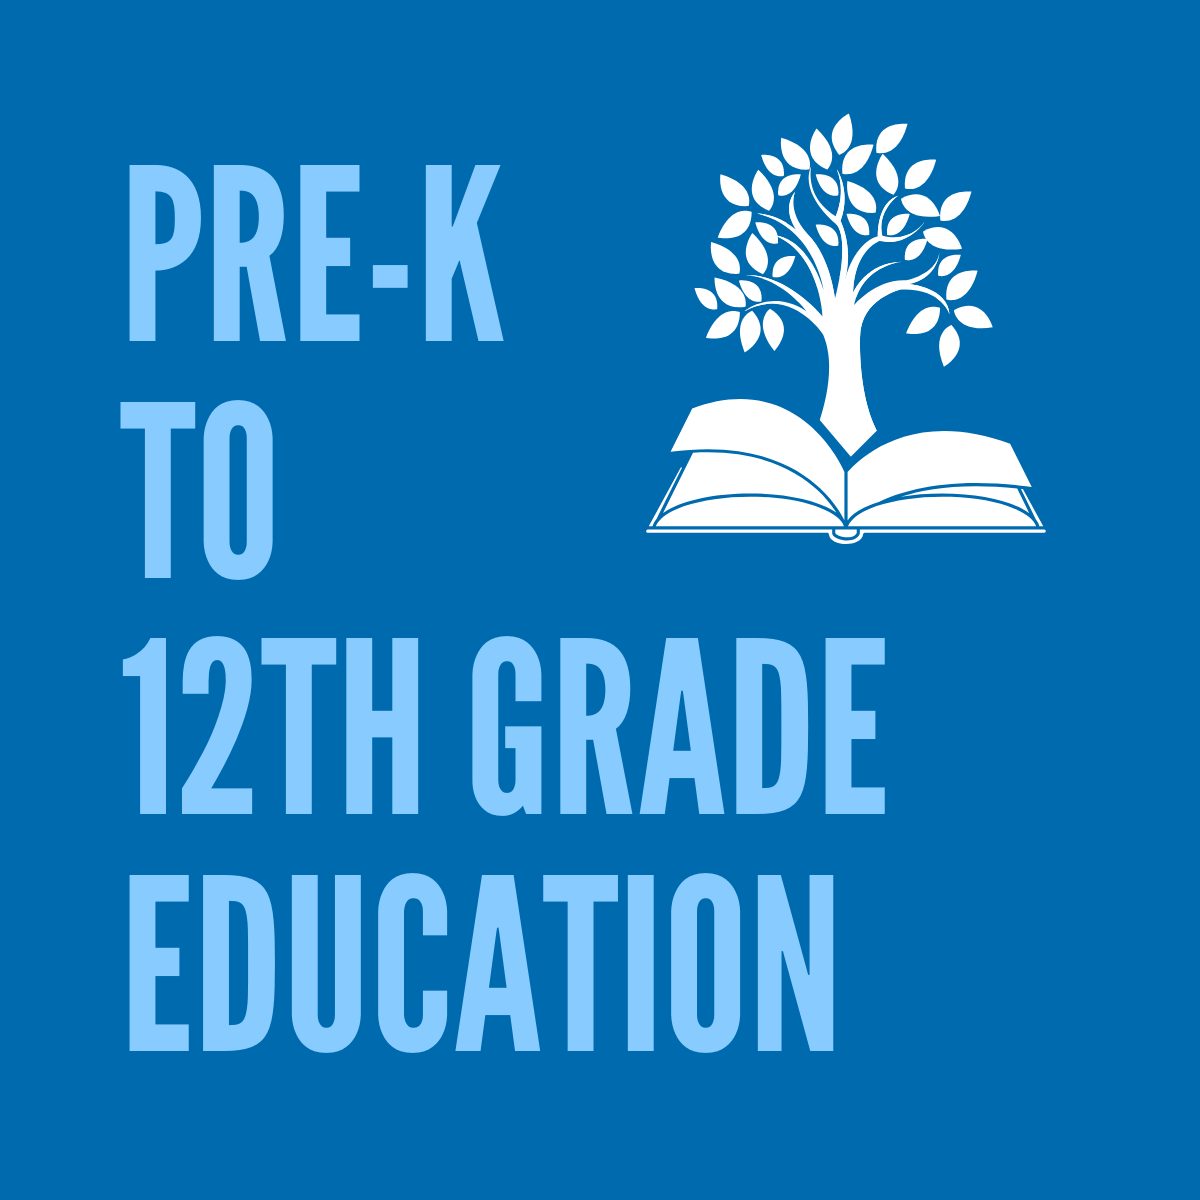 Pre-K to 12th Grade education